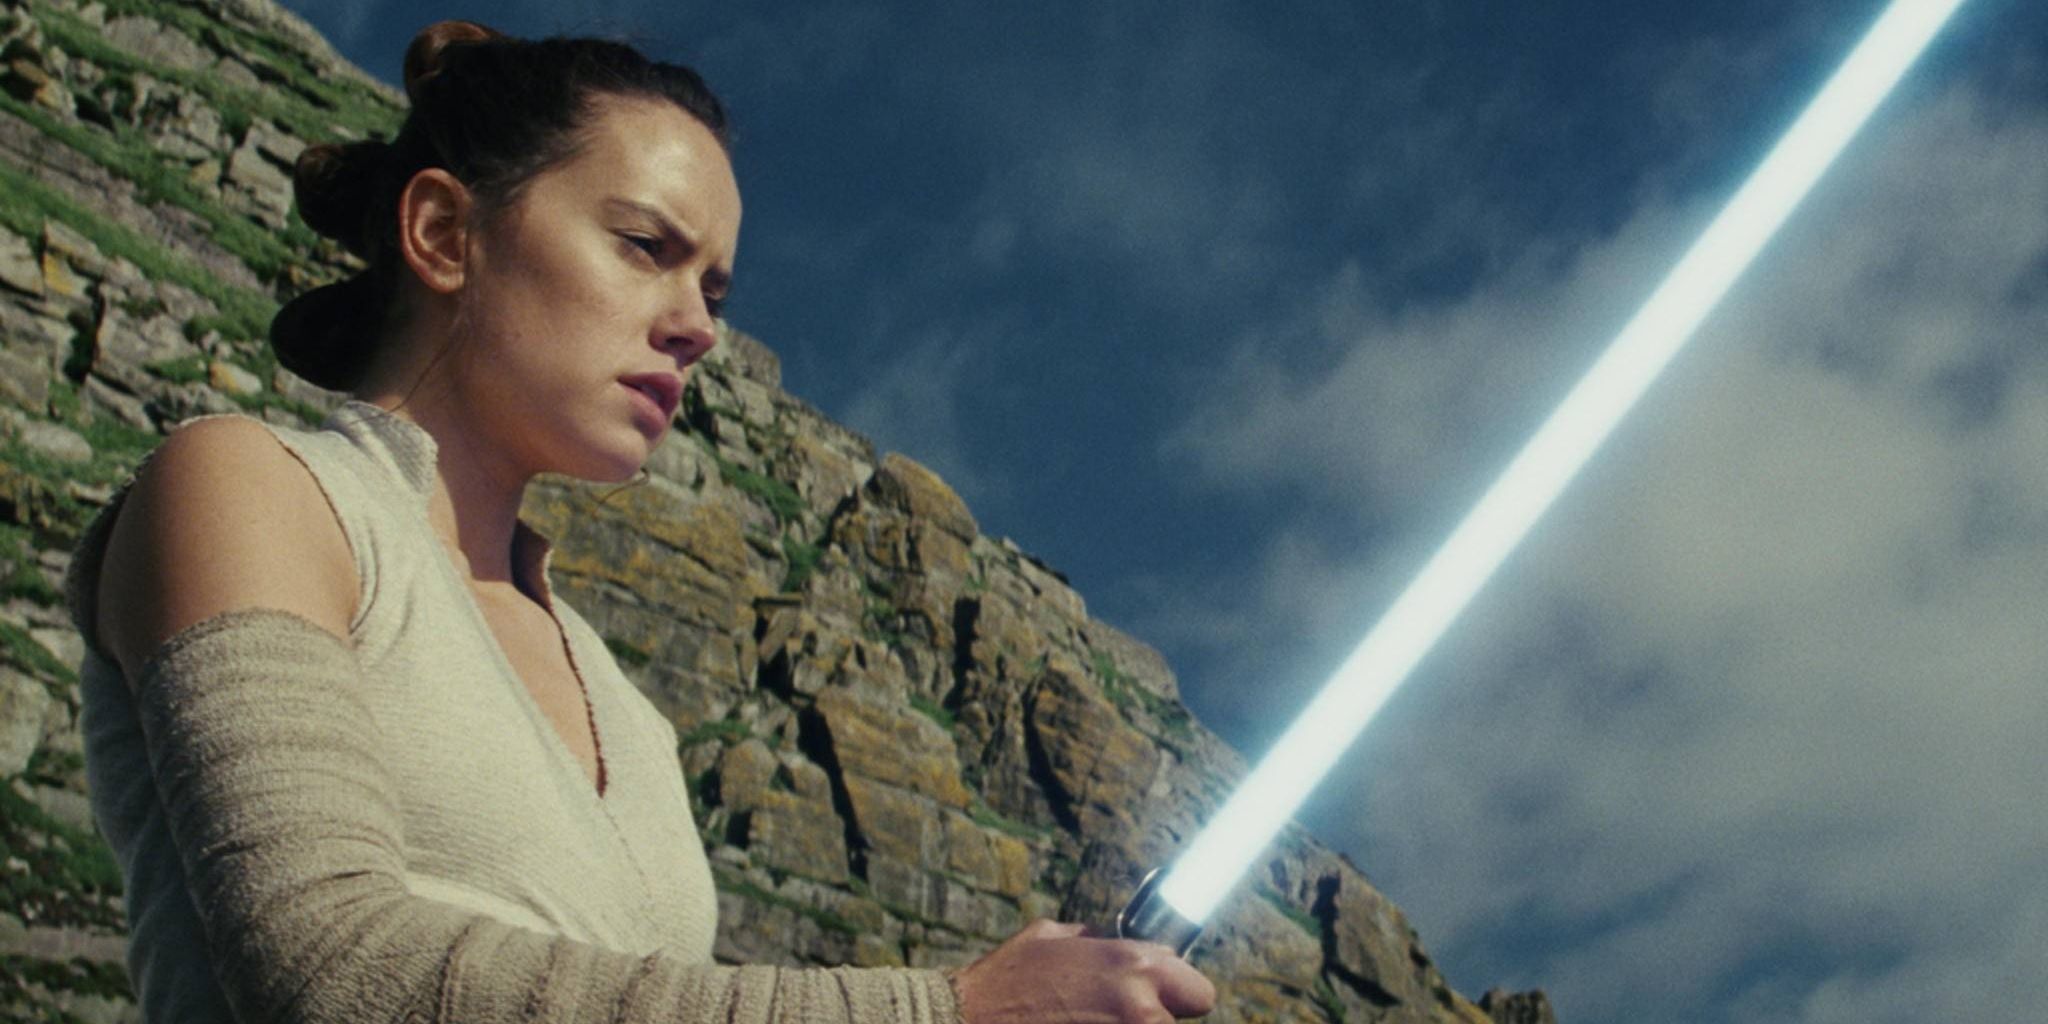 Rey in Star Wars The Last Jedi